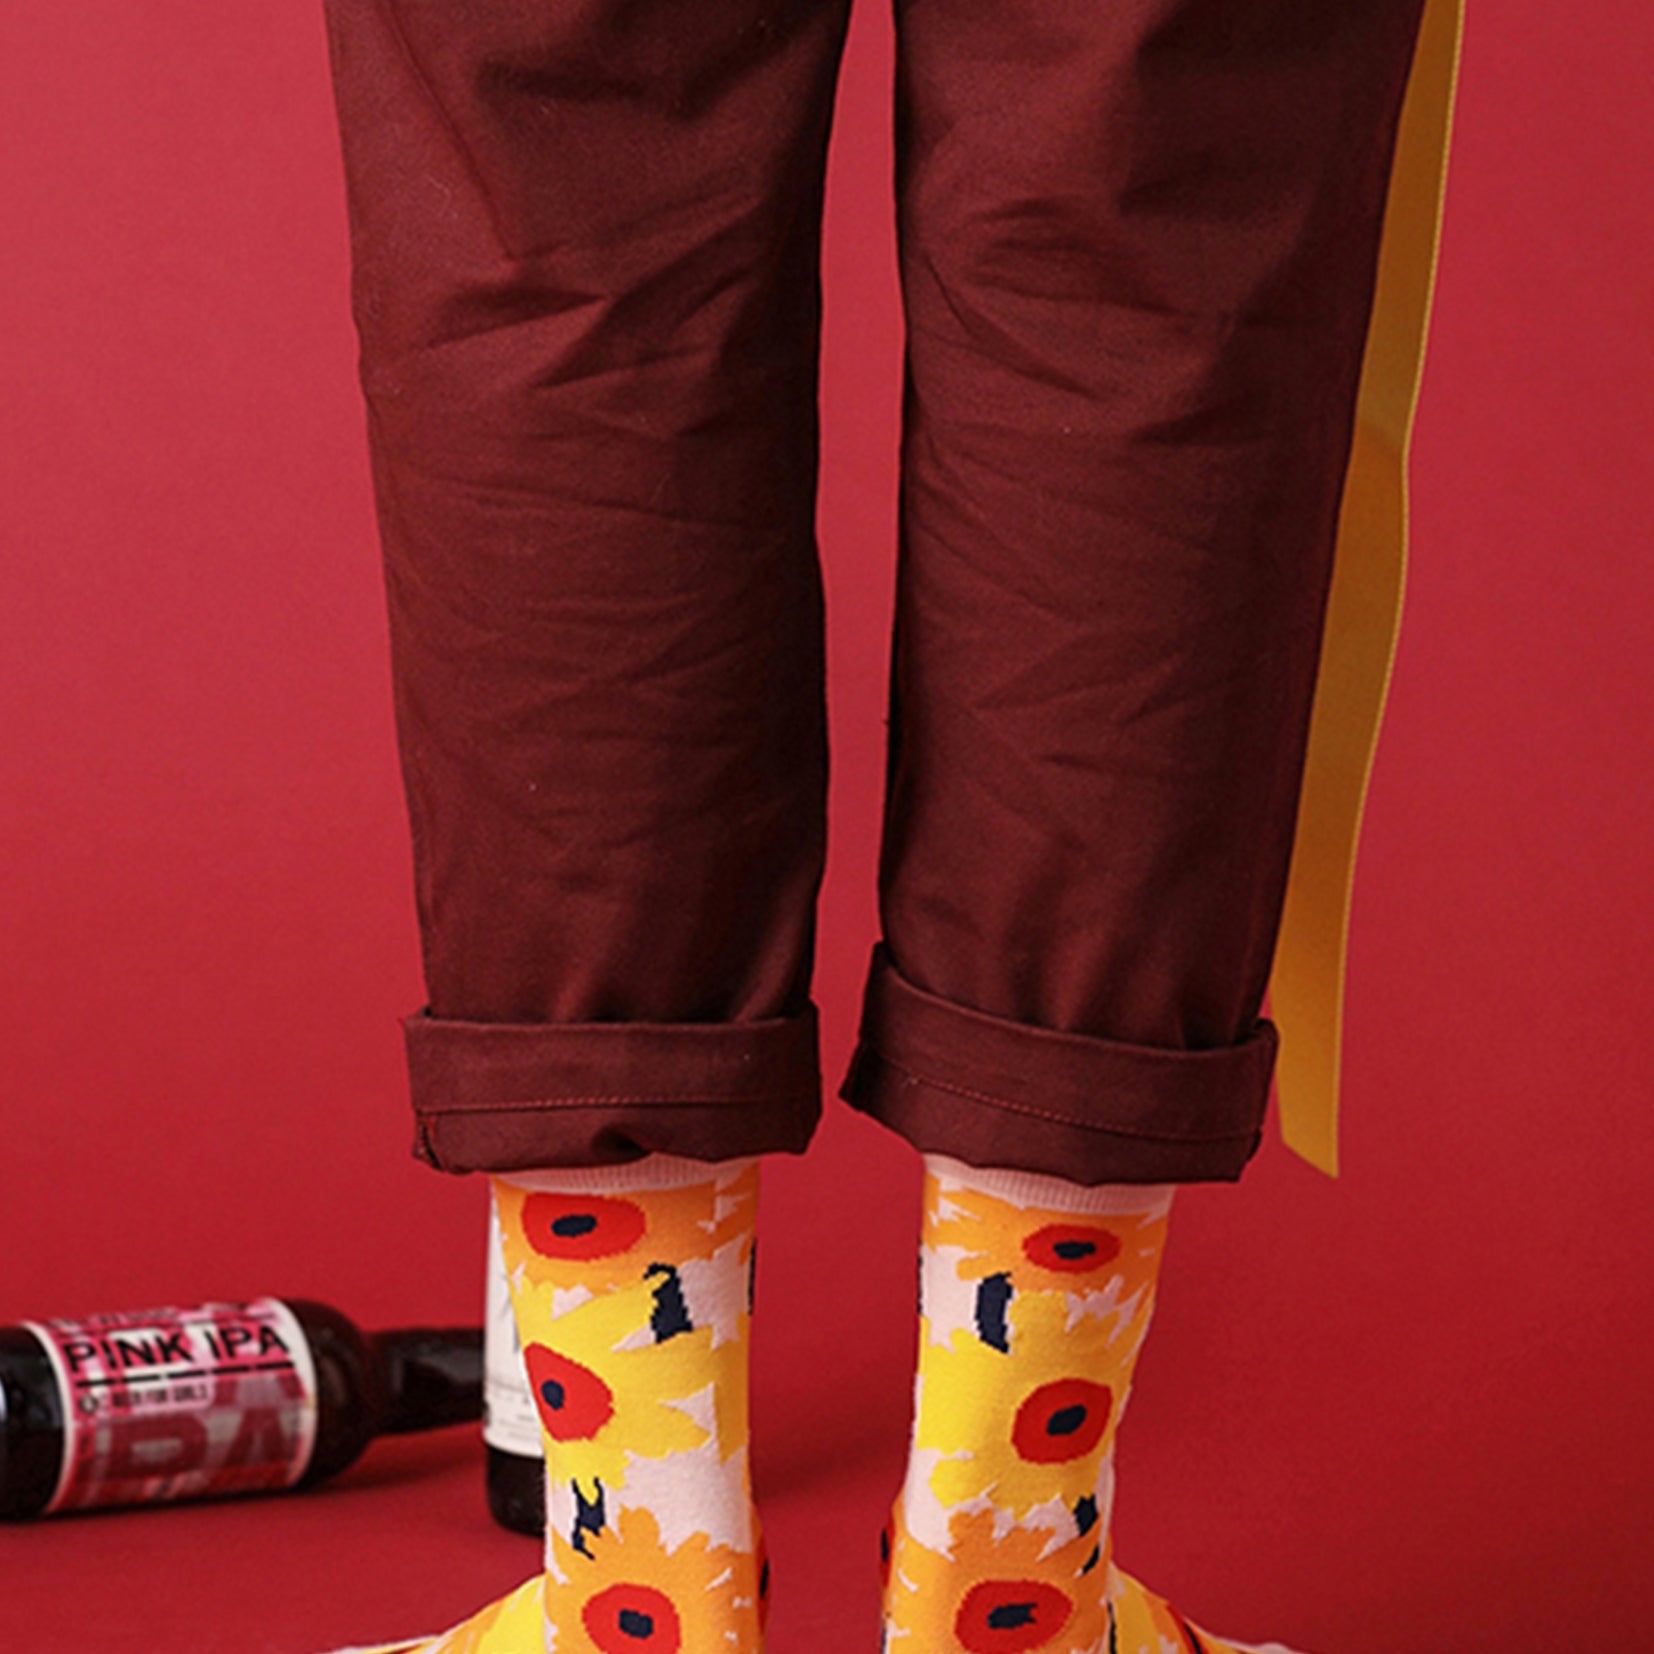 Yellow daisy mid-calf socks